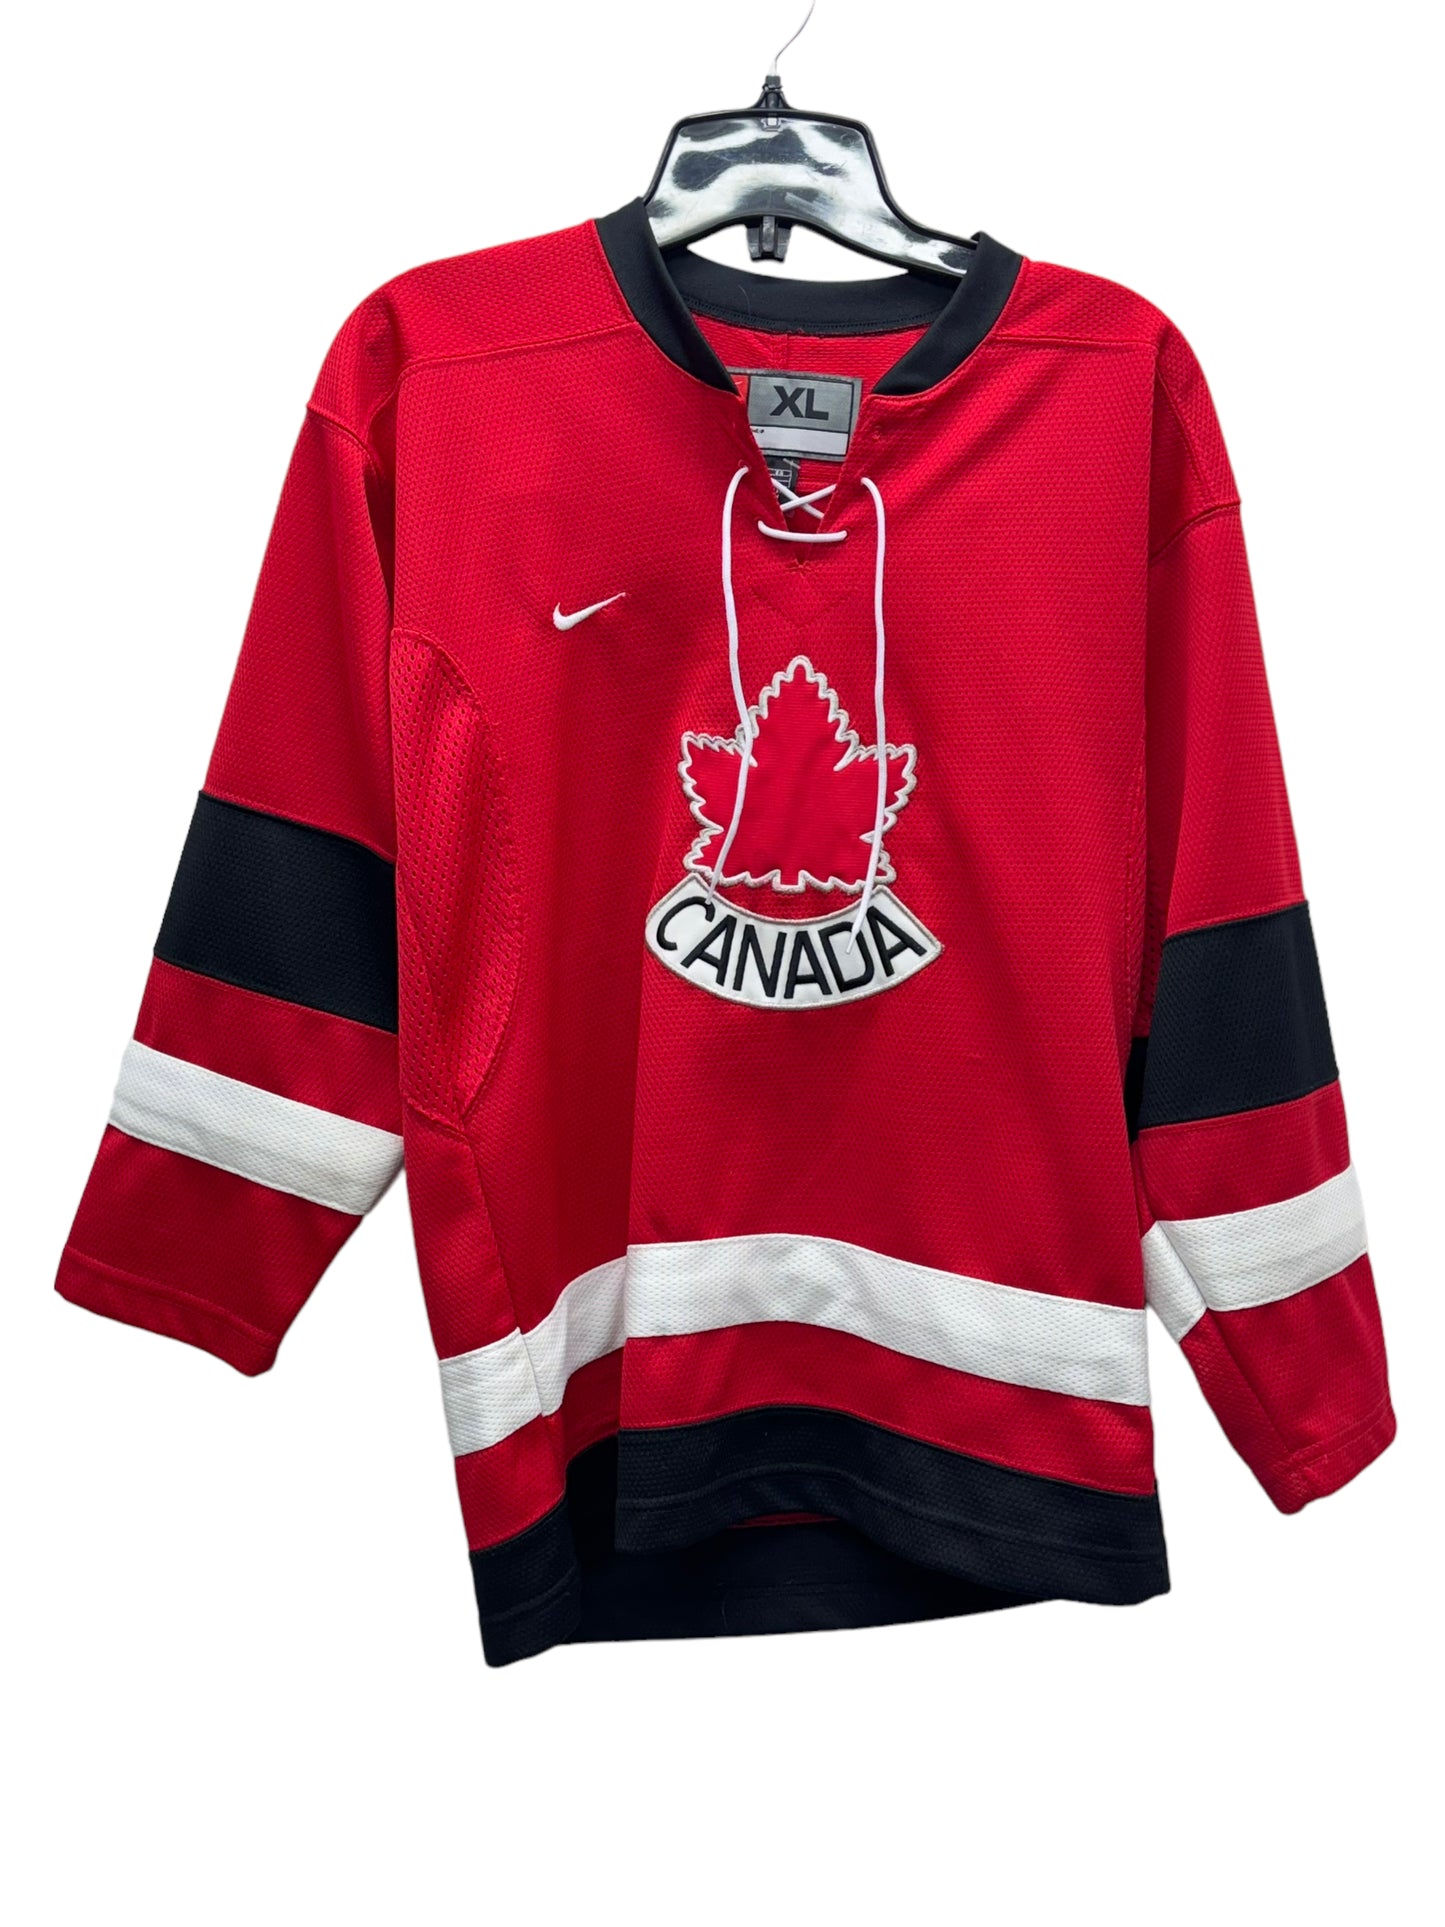 Nike Team Canada Long Sleeve Hockey Jersey - XL (Youth)